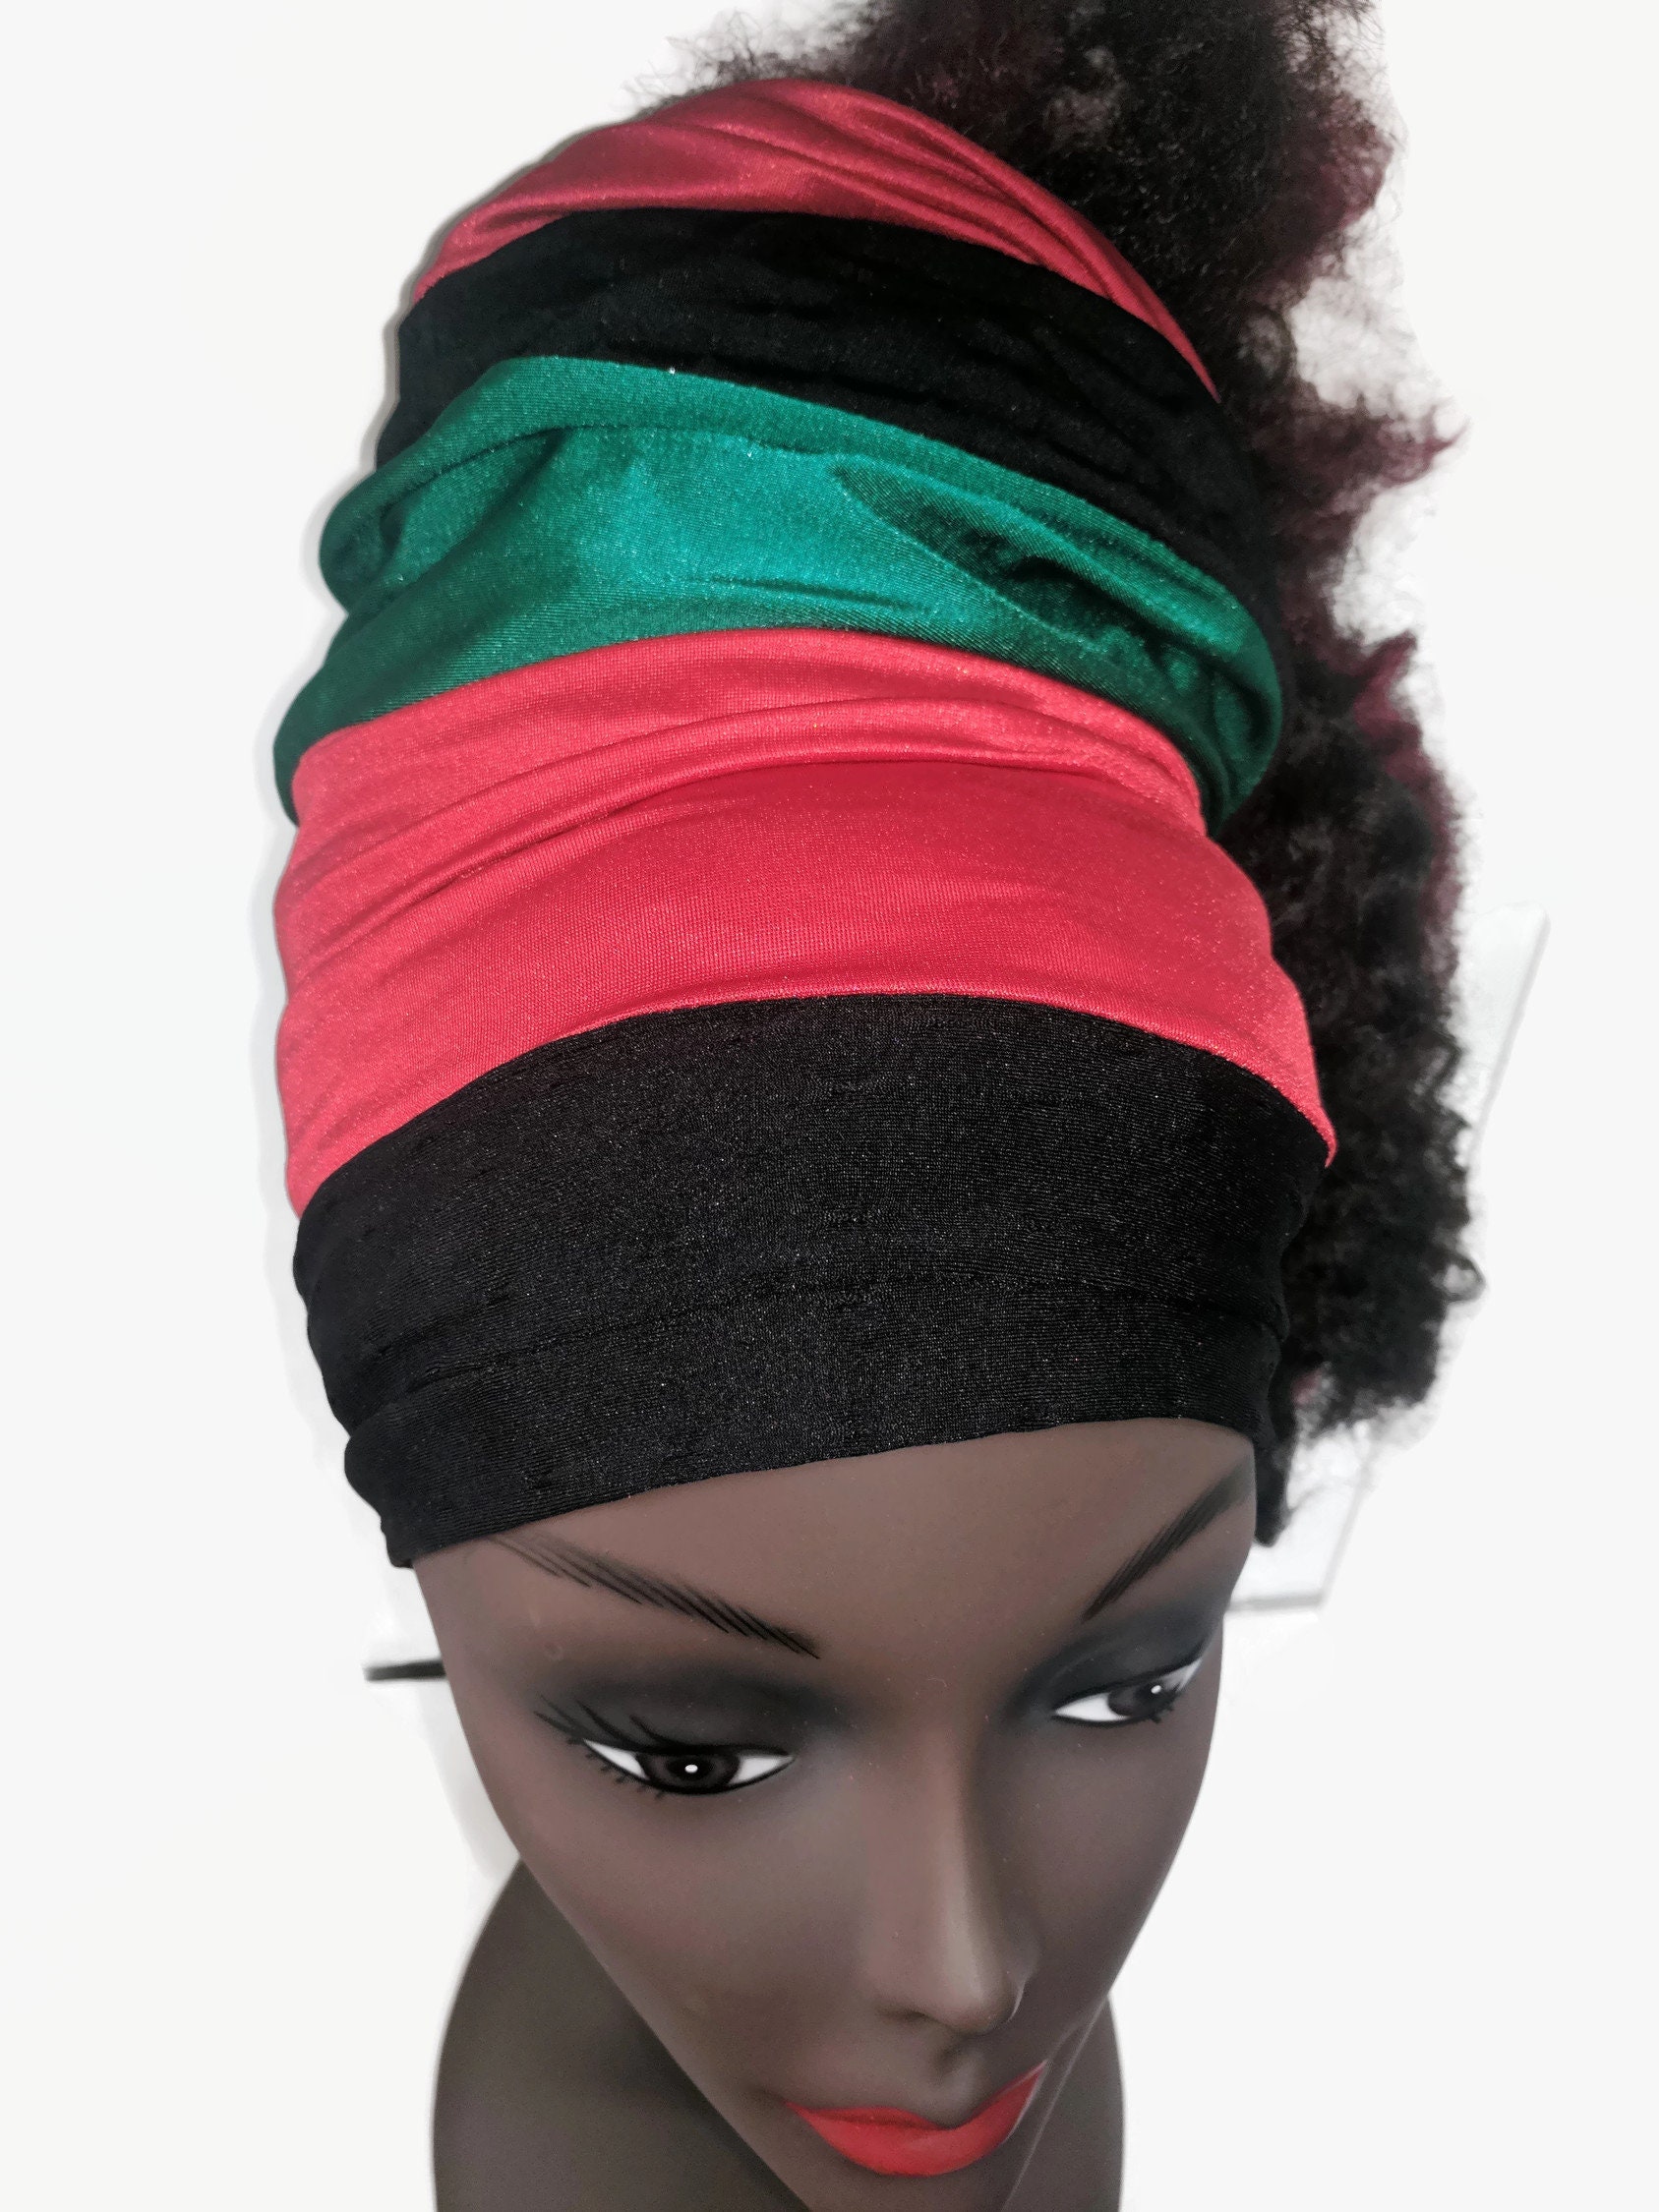 Bob Marley Rasta Wear Hair Protector Soc Hair Loc Luxury Spandex